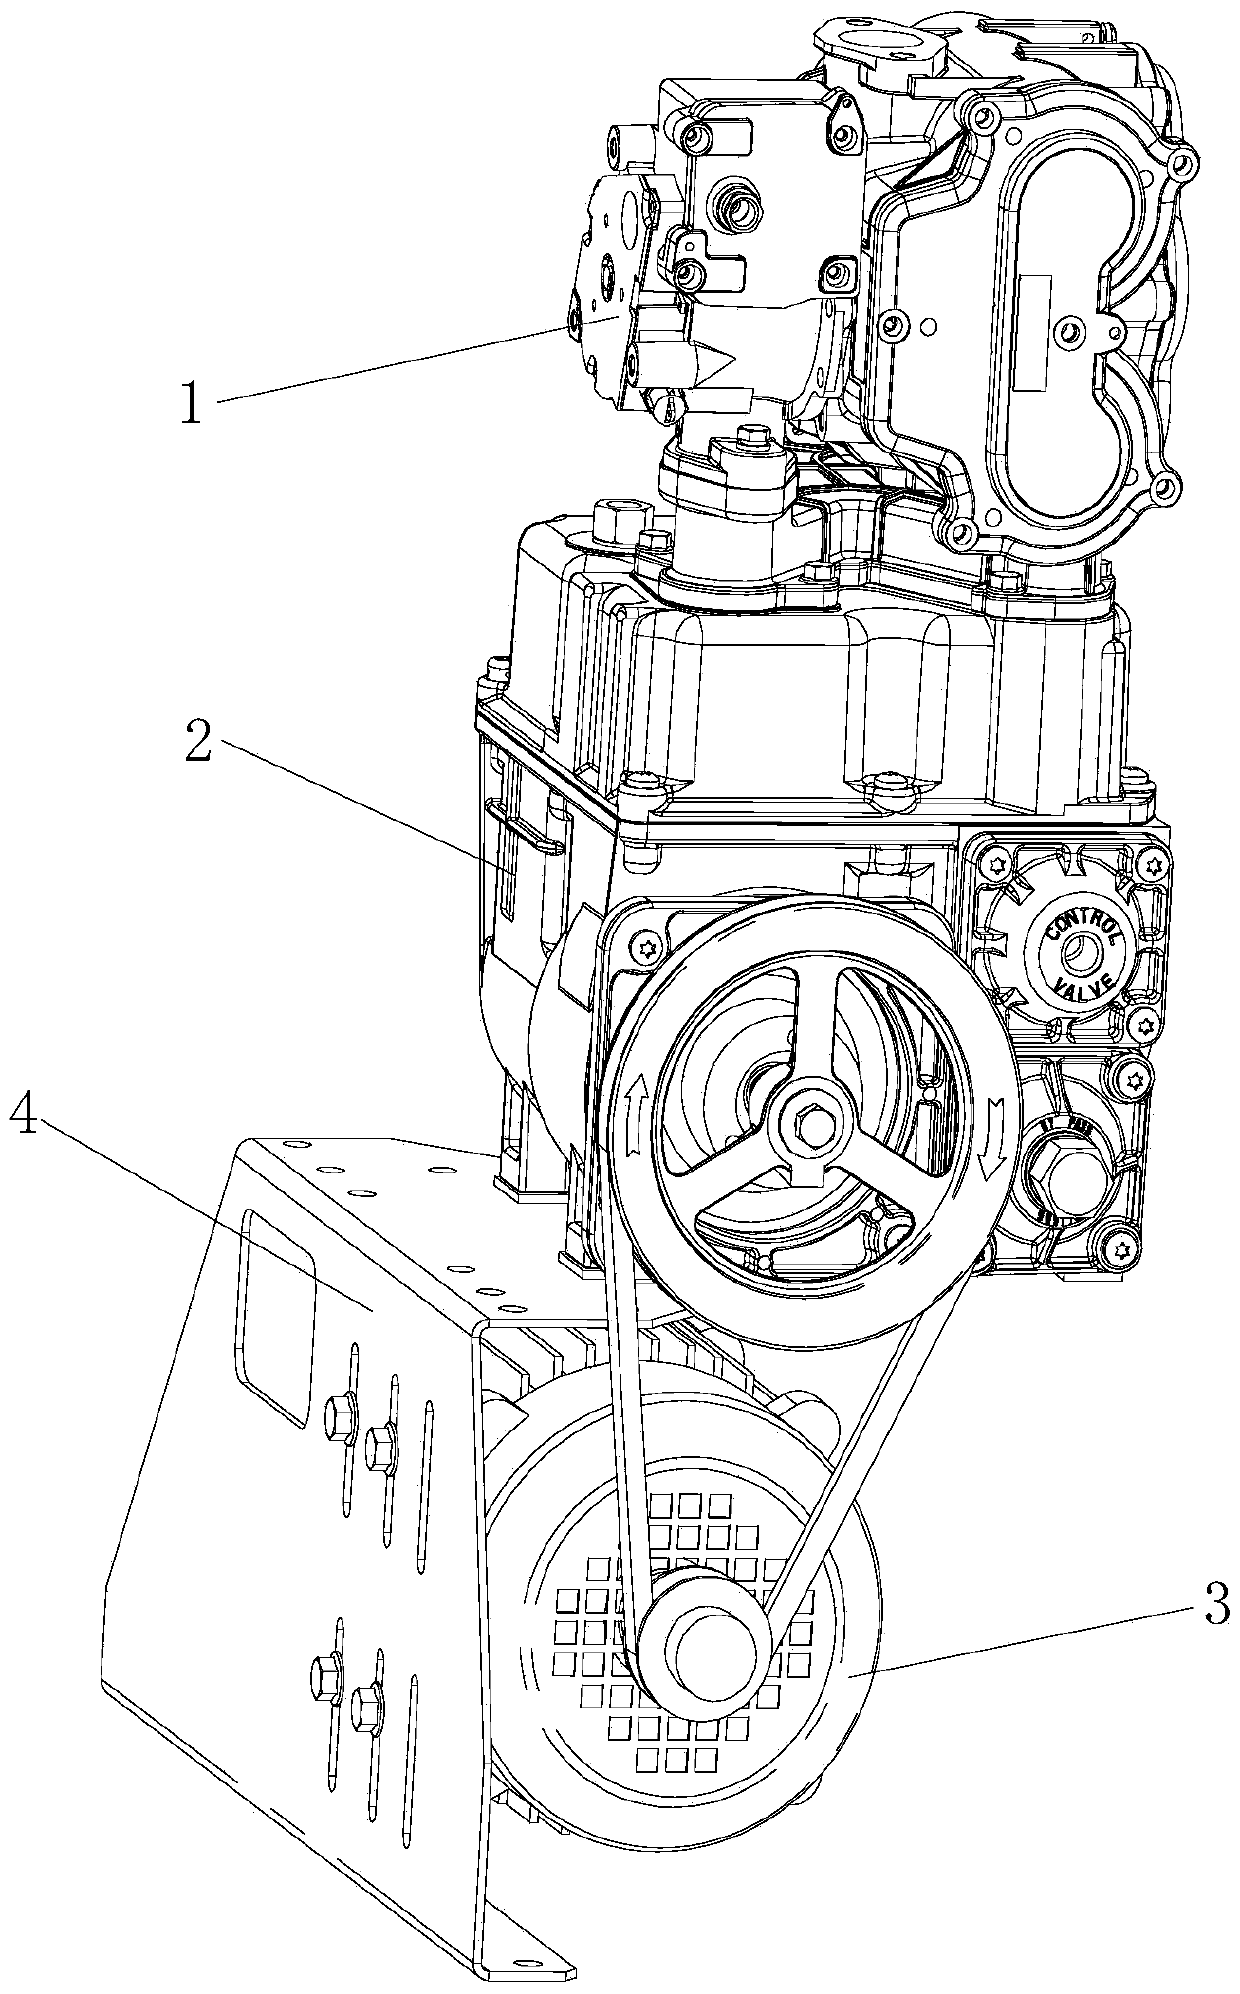 Hydraulic system of a fuel dispenser